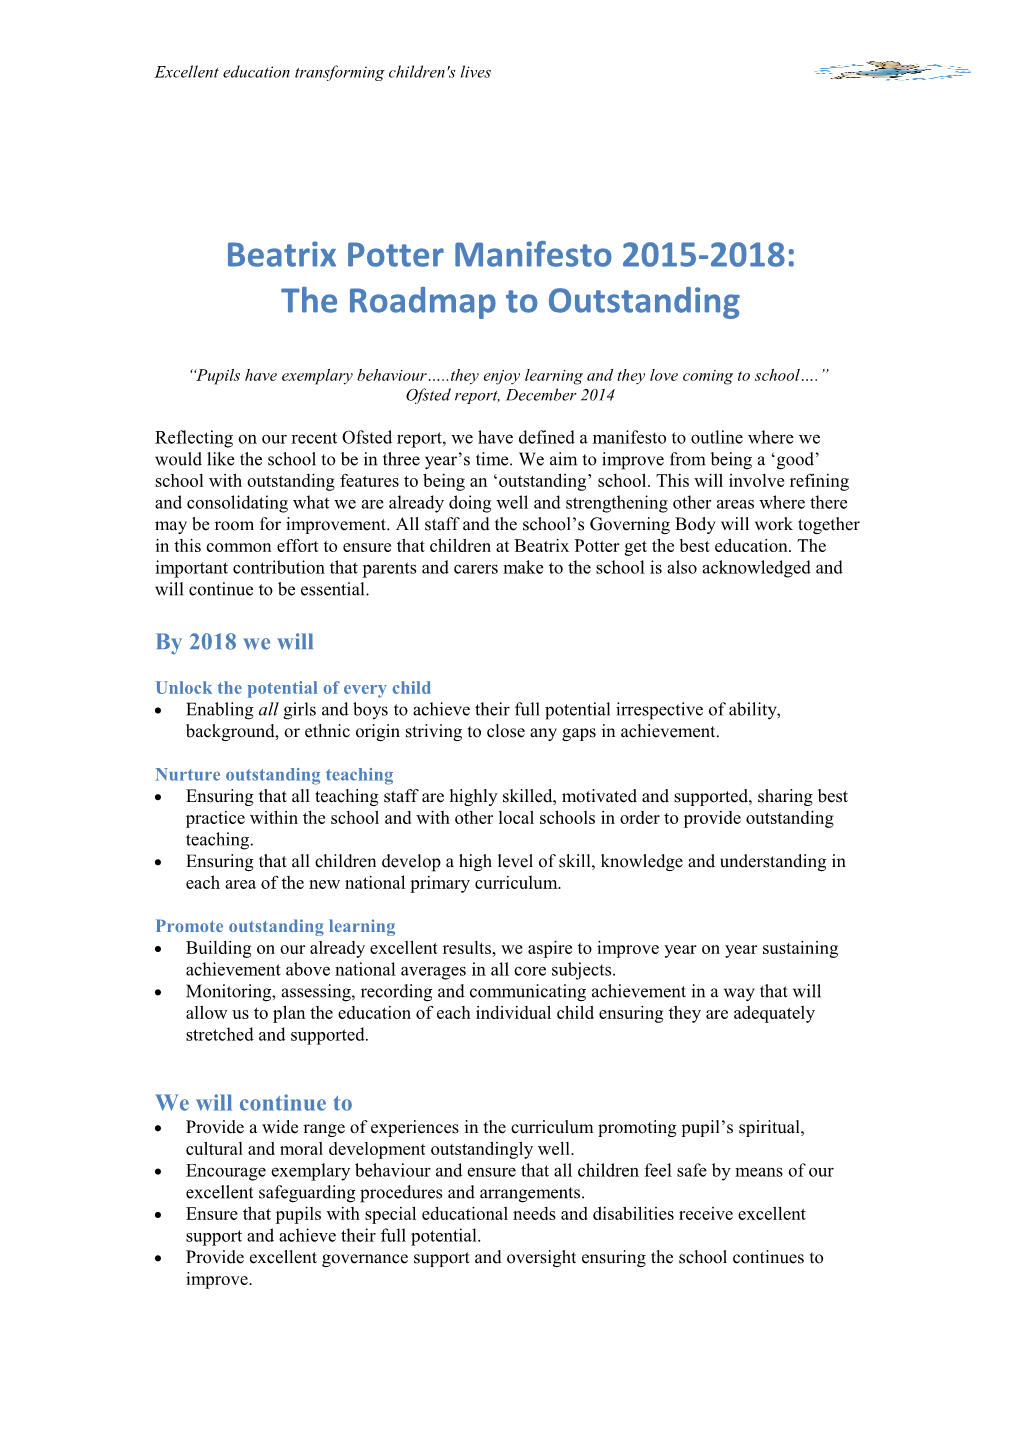 Beatrix Potter Manifesto 2015-2018